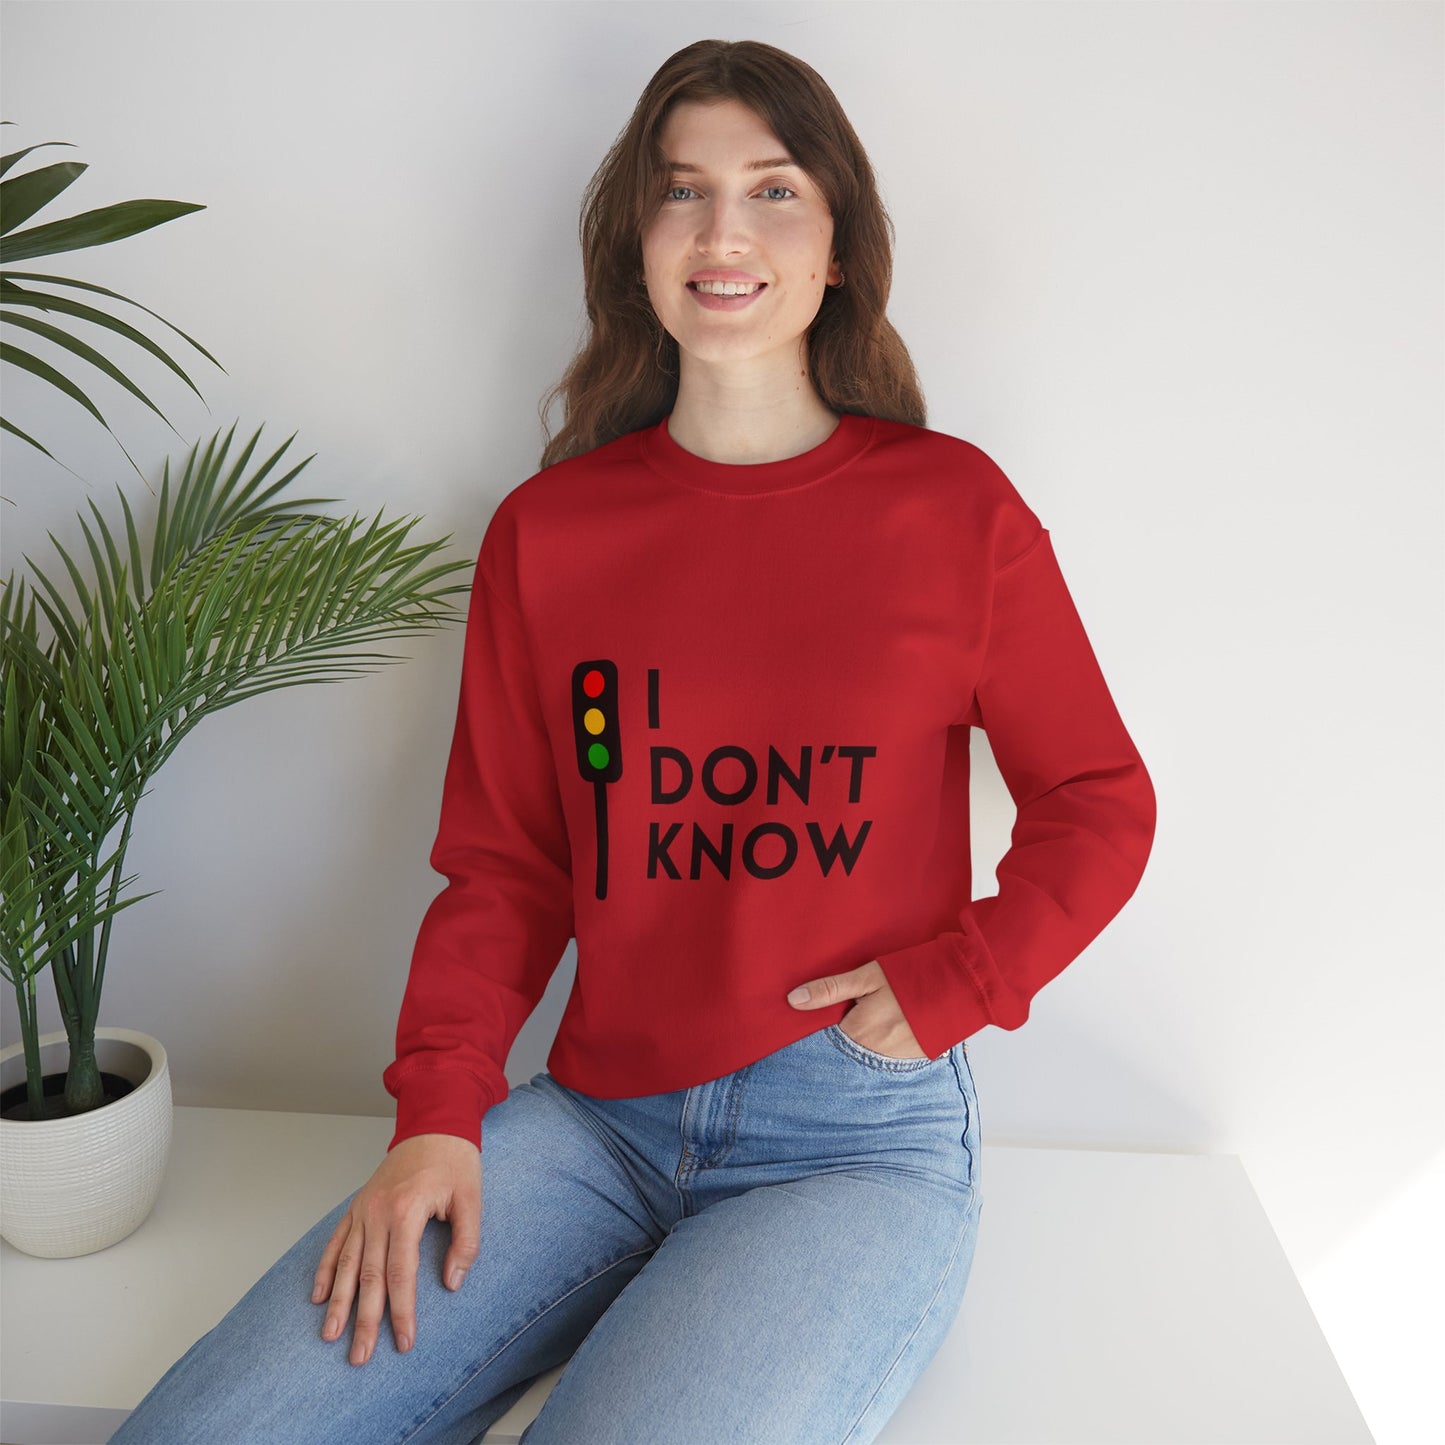 DBATC Inspired IDK Sweatshirt